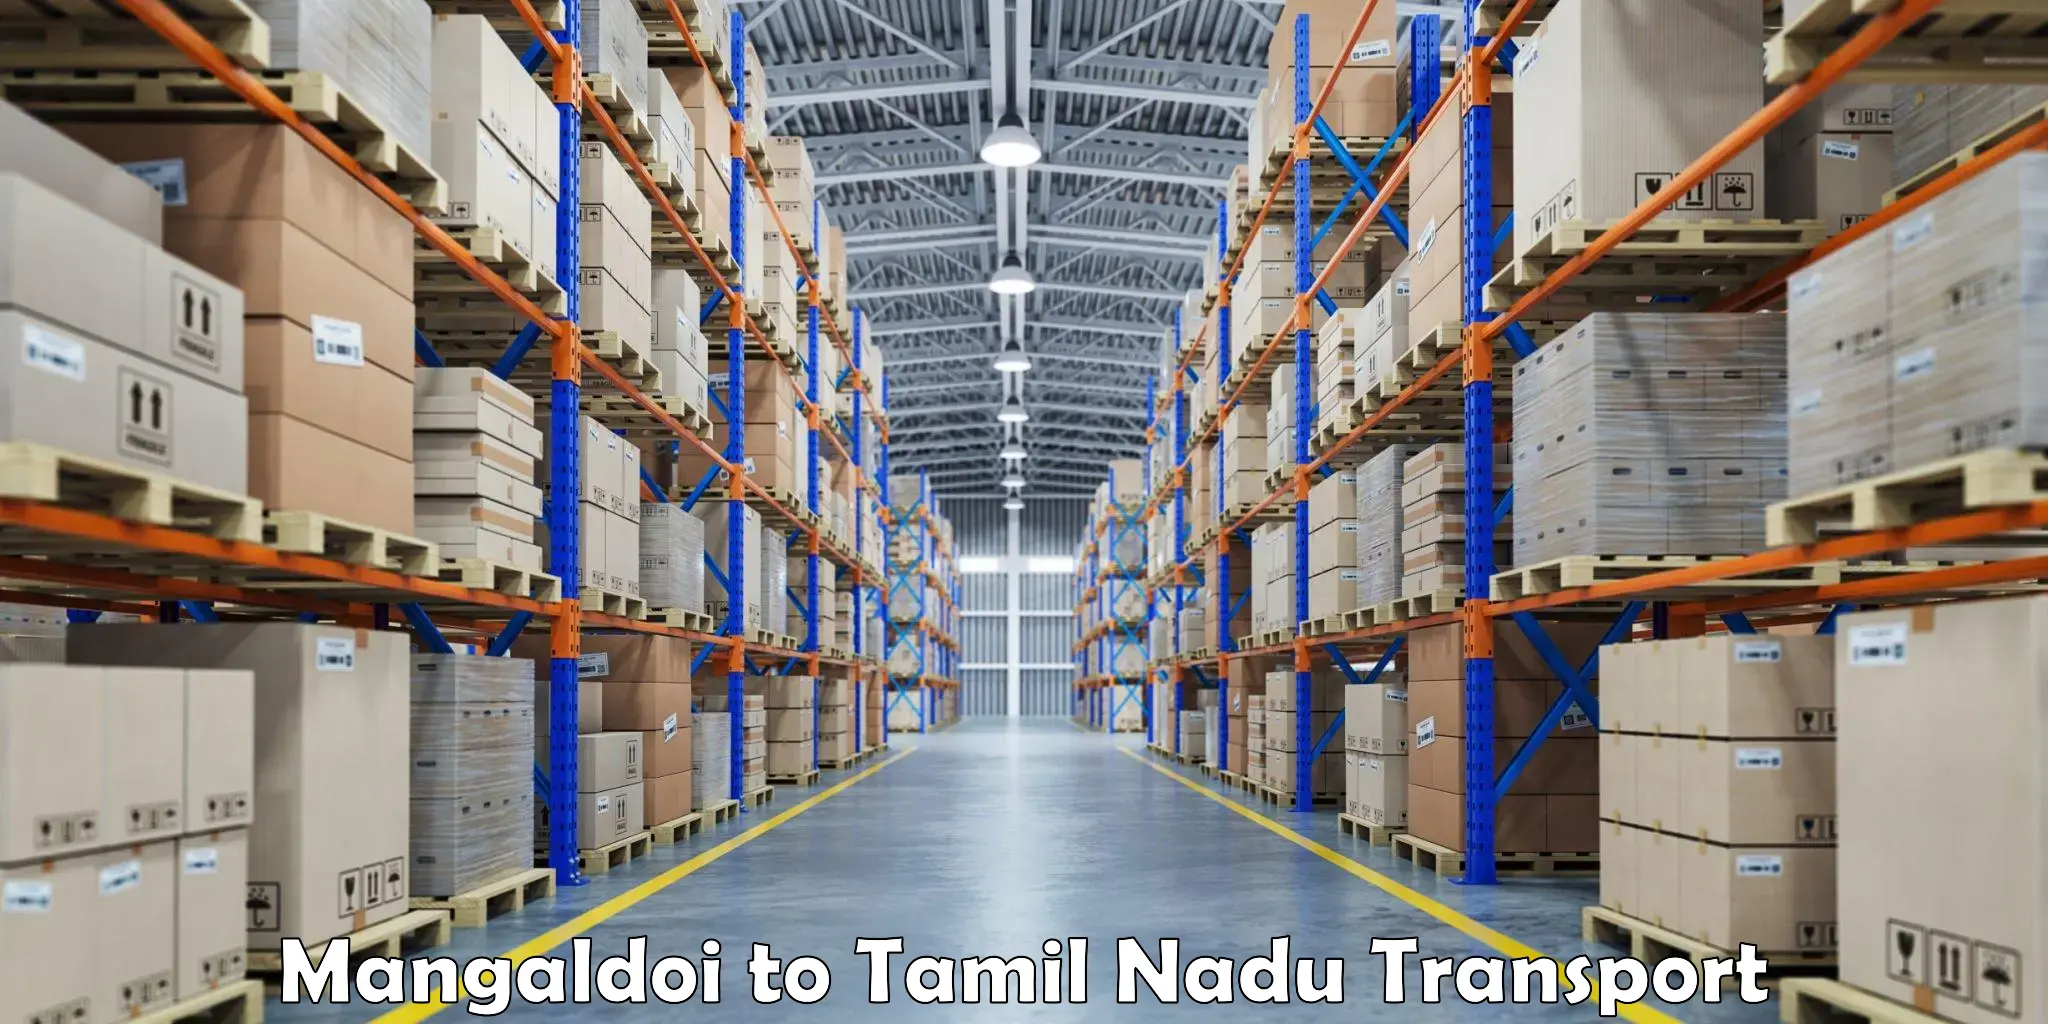 Truck transport companies in India Mangaldoi to Padi